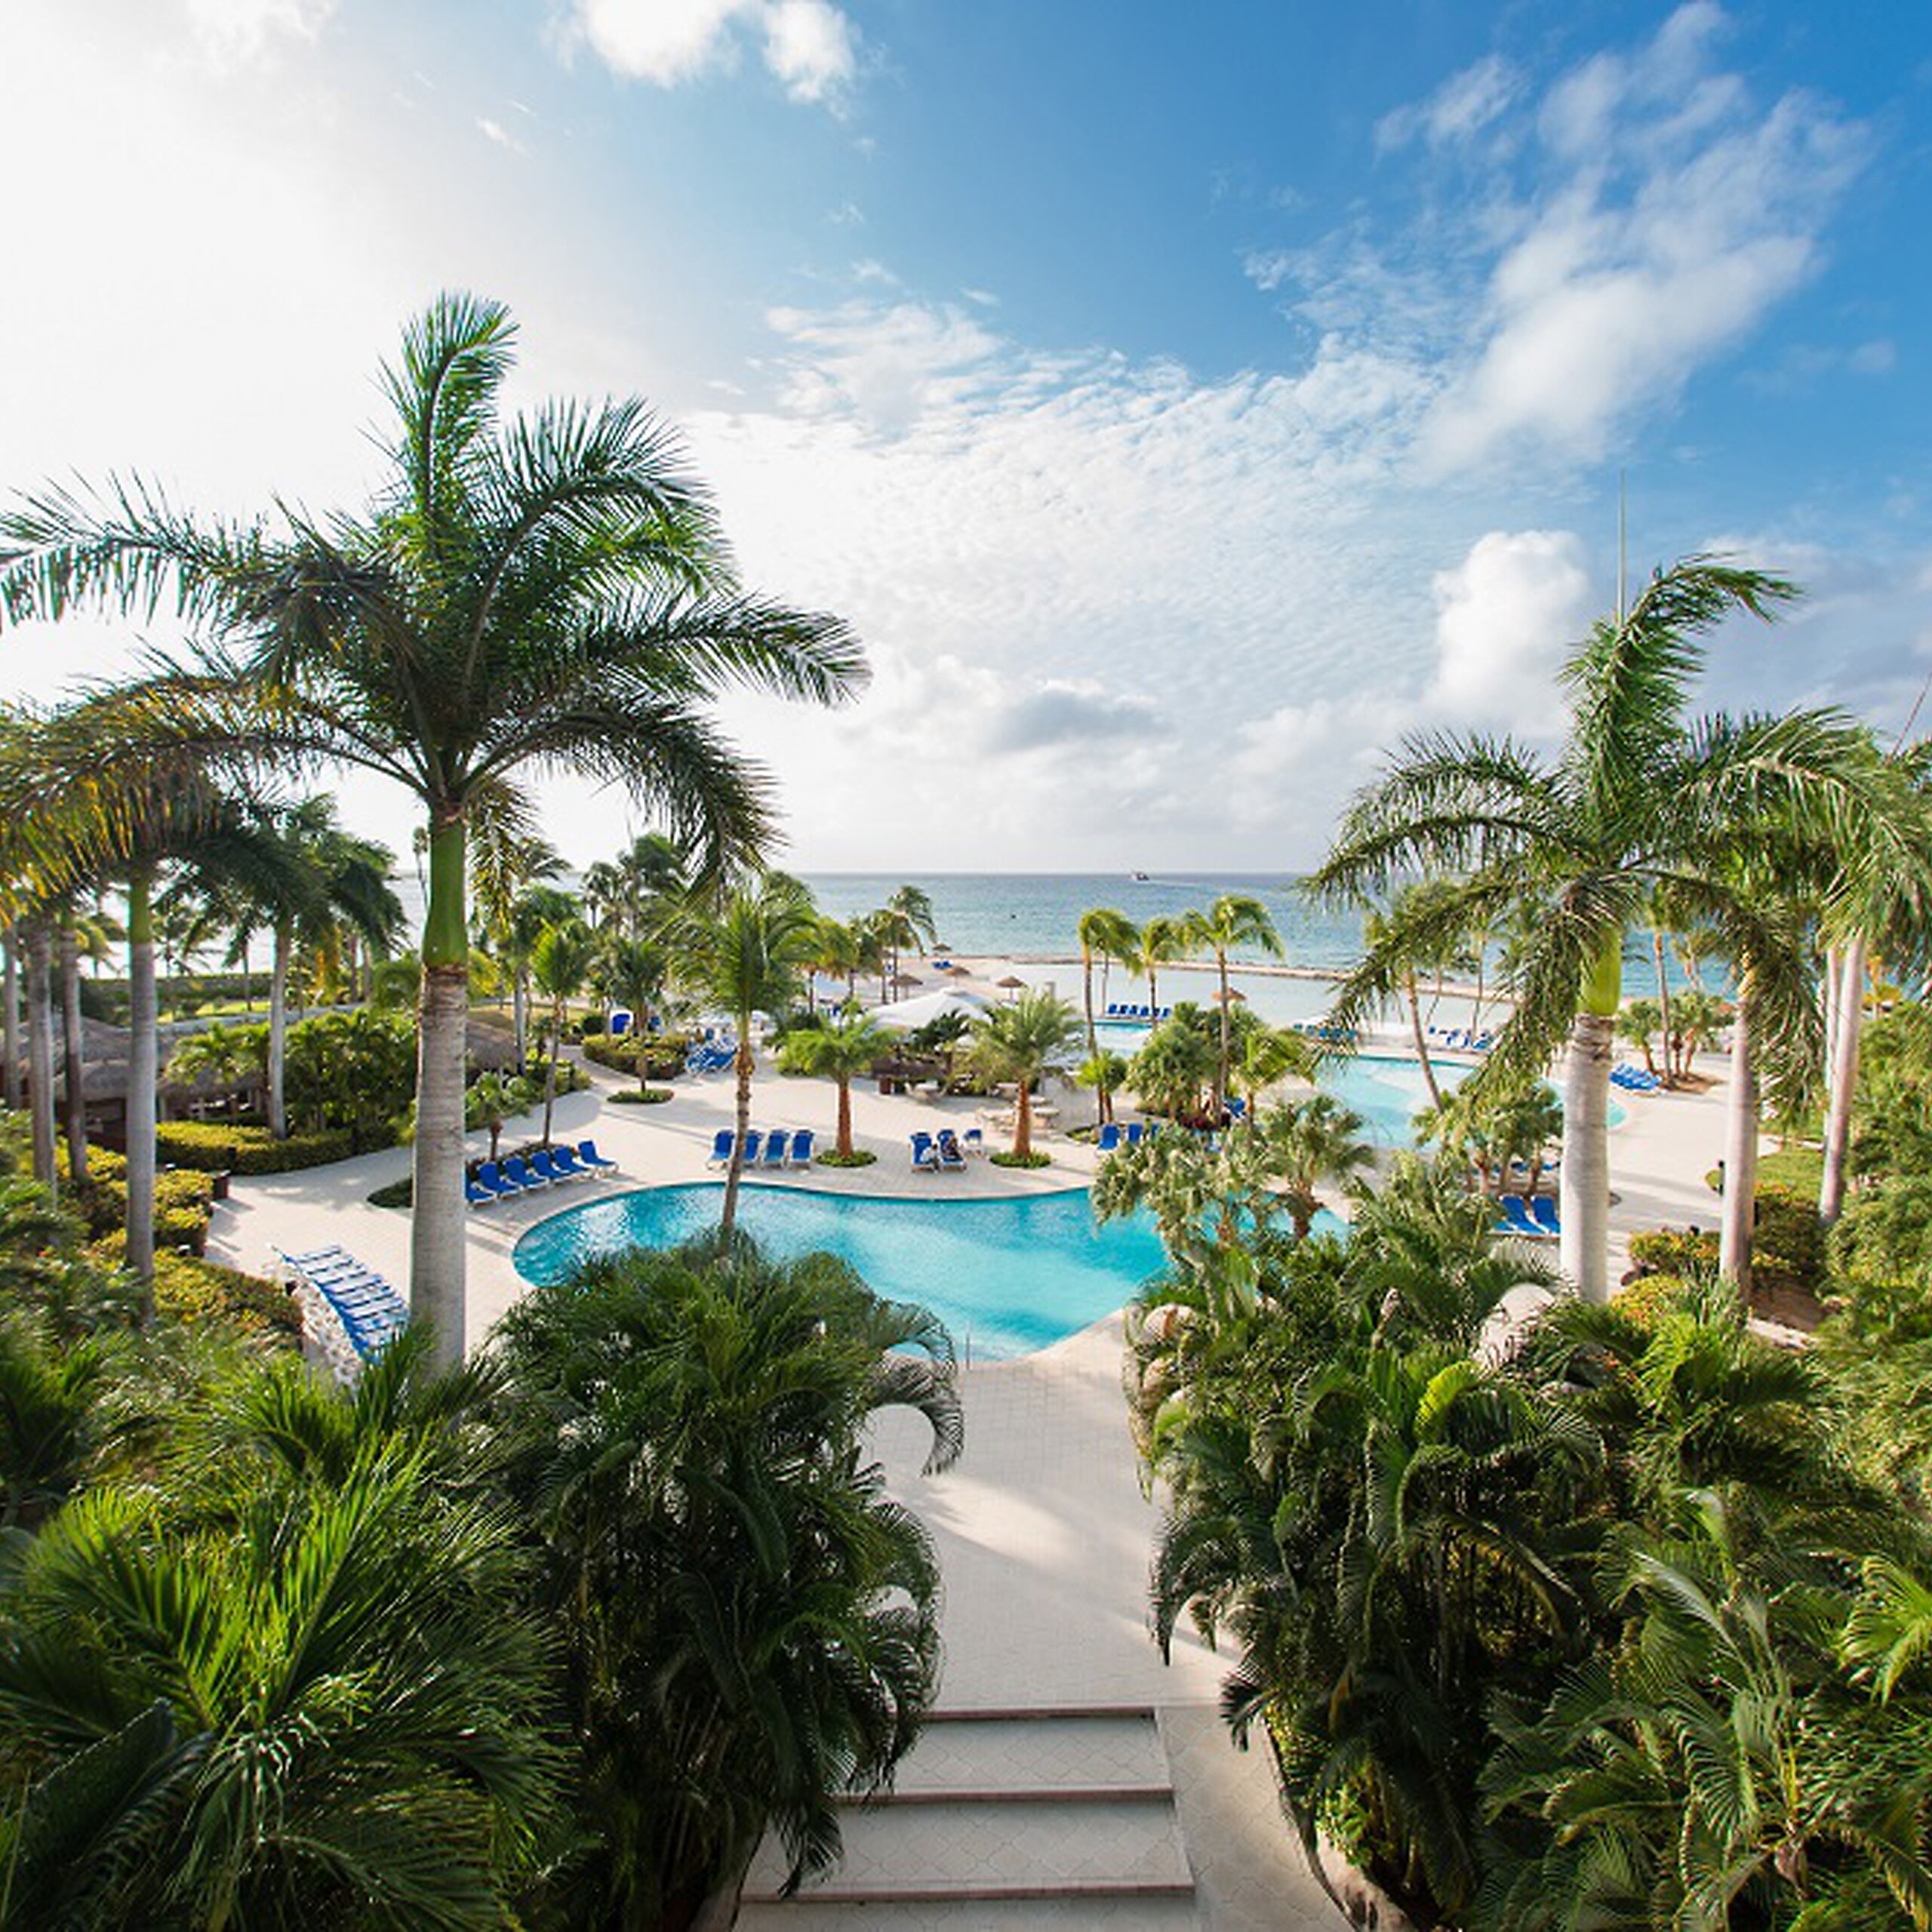 Renaissance Aruba Resort & Casino Hosts Summer Launch Party